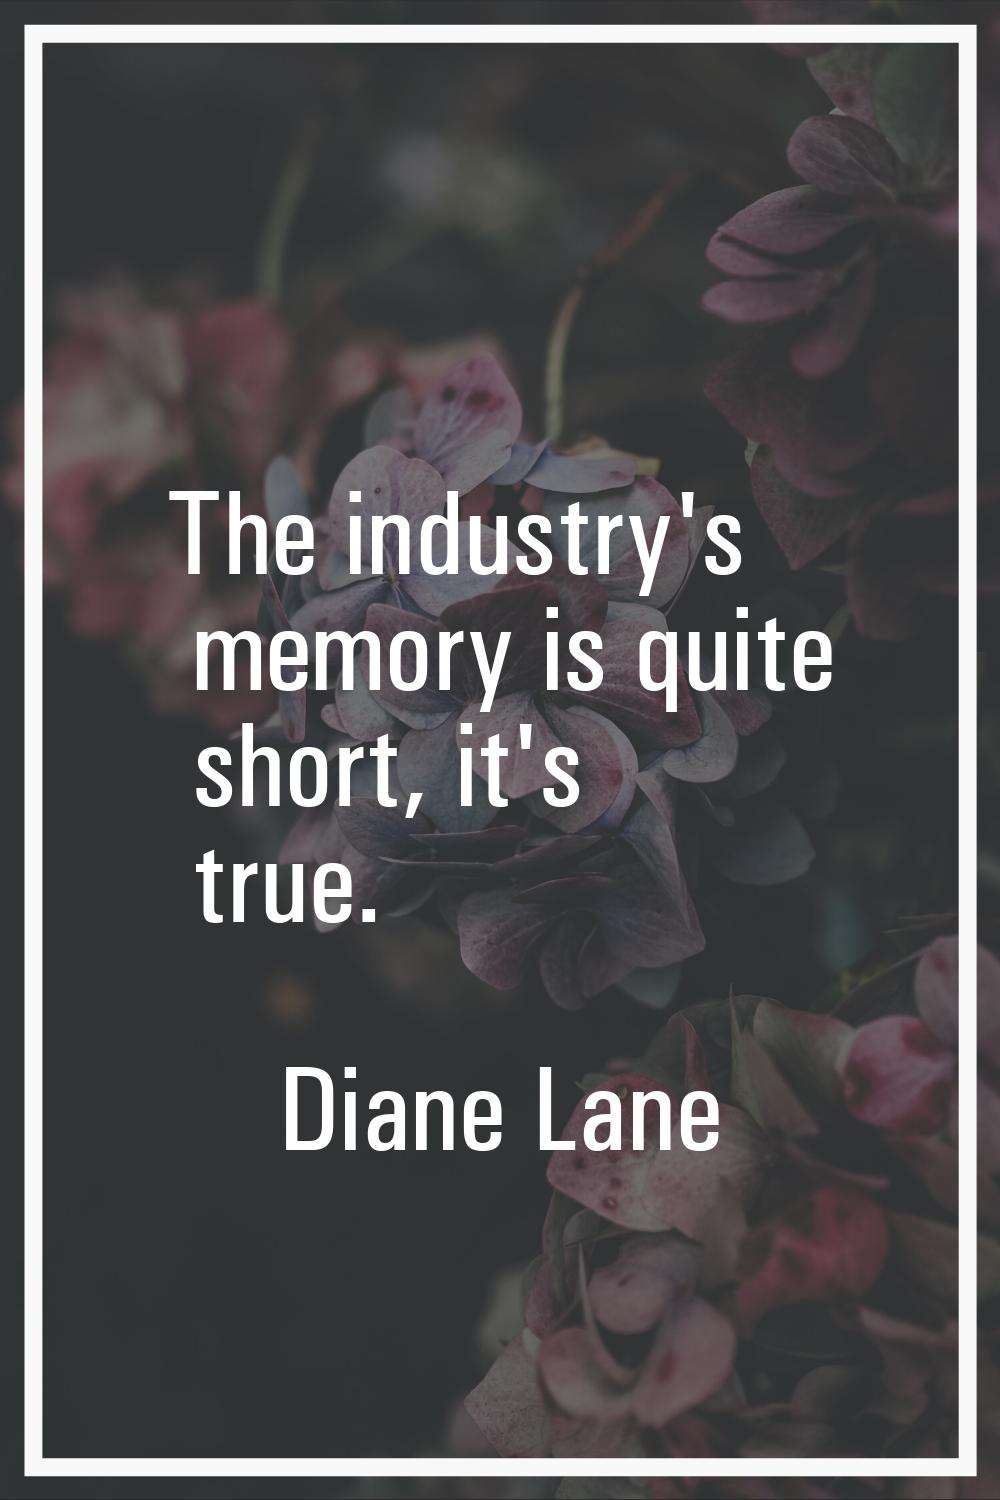 The industry's memory is quite short, it's true.